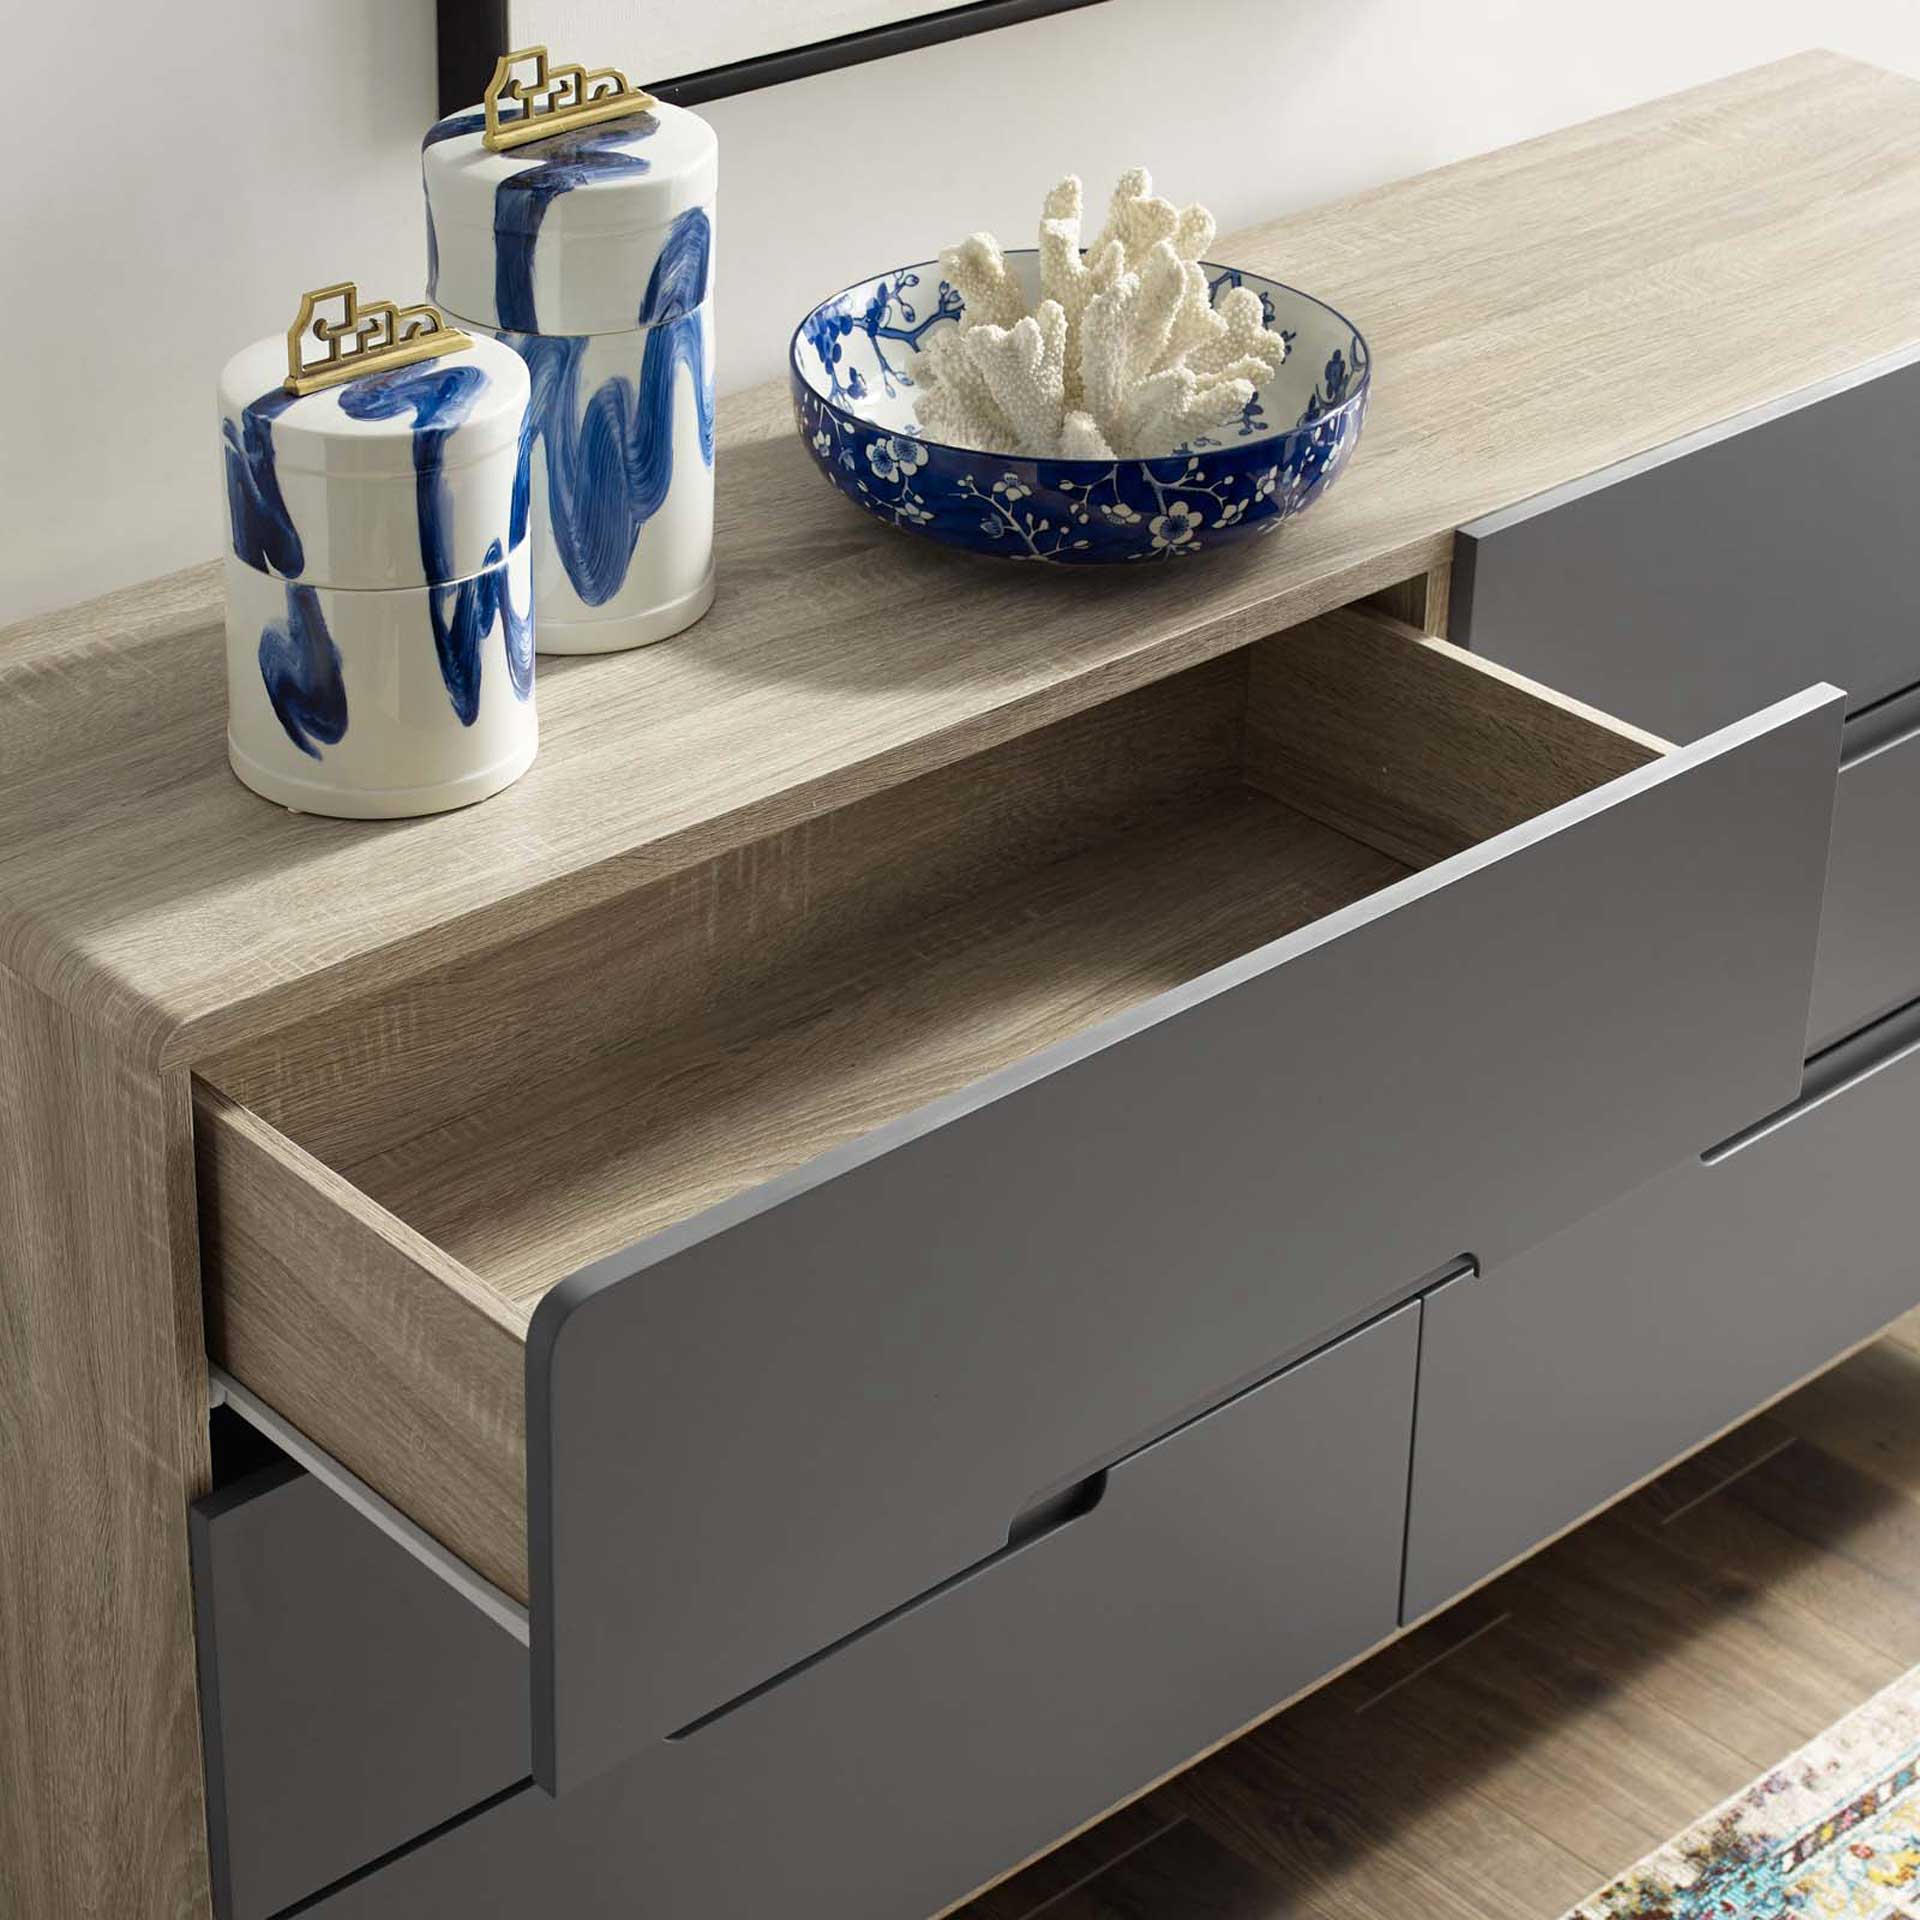 Orion Six-Drawer Wood Dresser Natural Gray